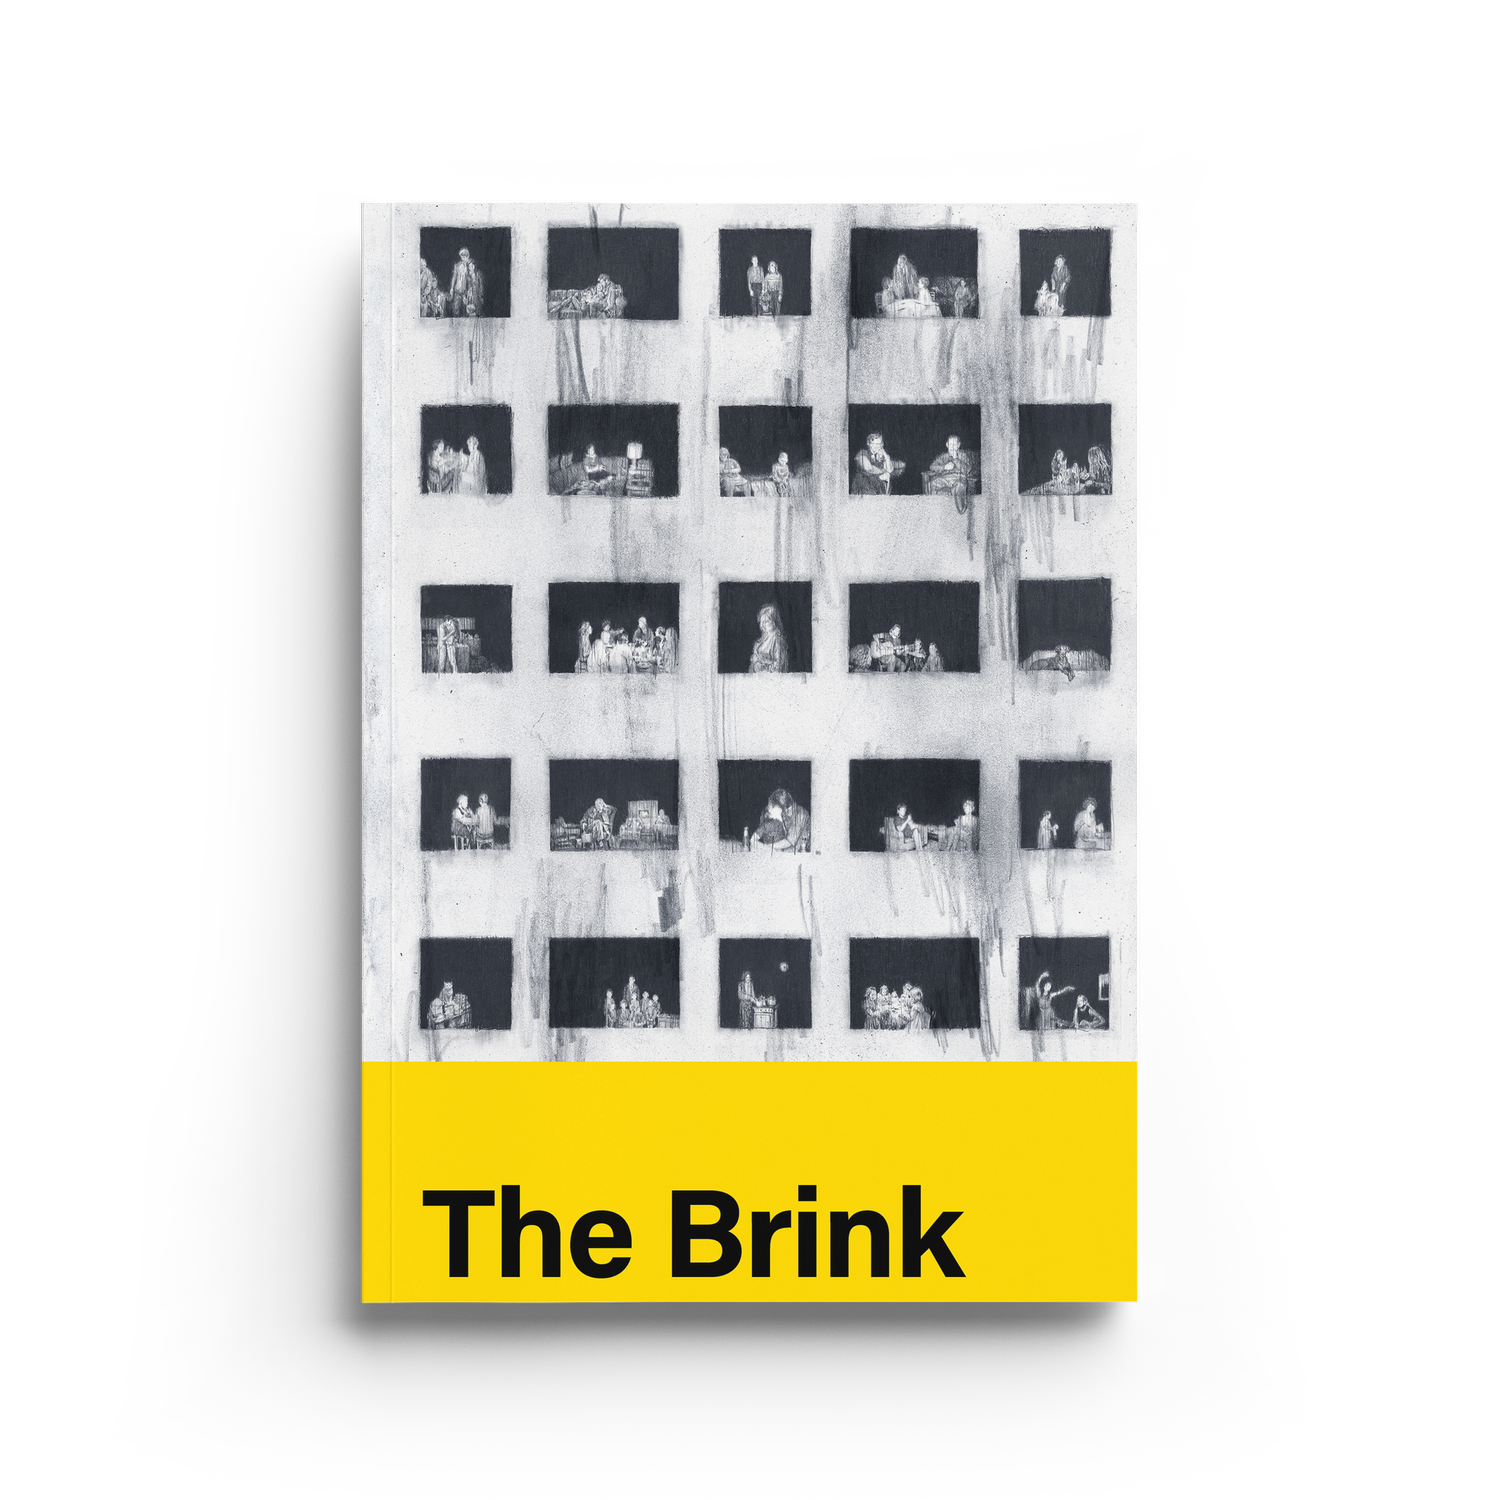 The Brink - Bosla Arts publication